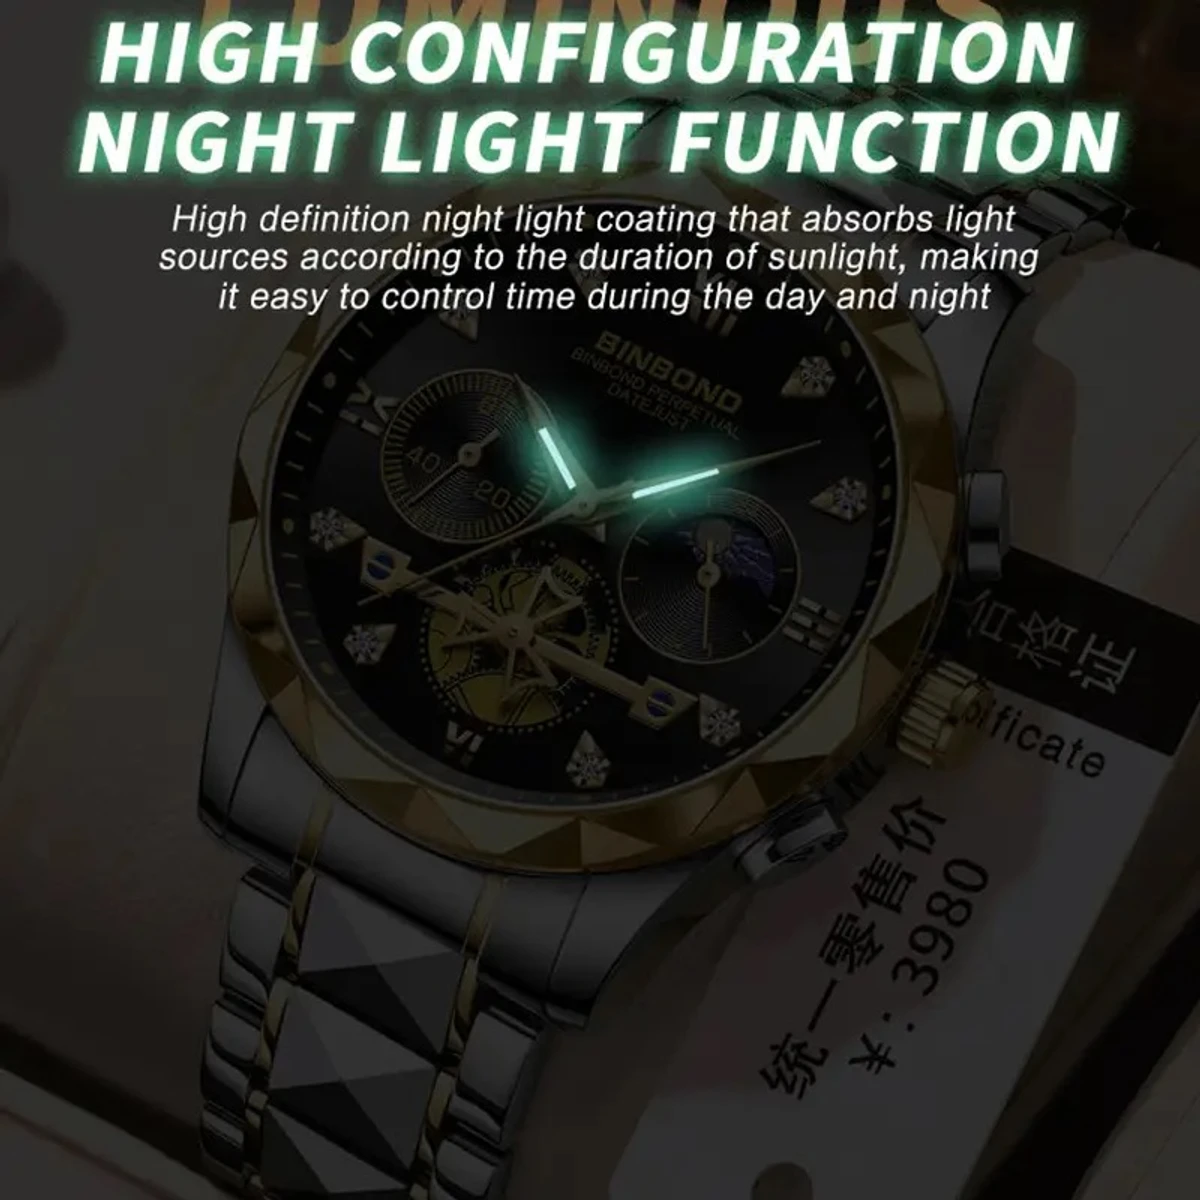 New Luxury Watch For Men Stainless Steel Waterproof Business Sport Wristwatches- Green